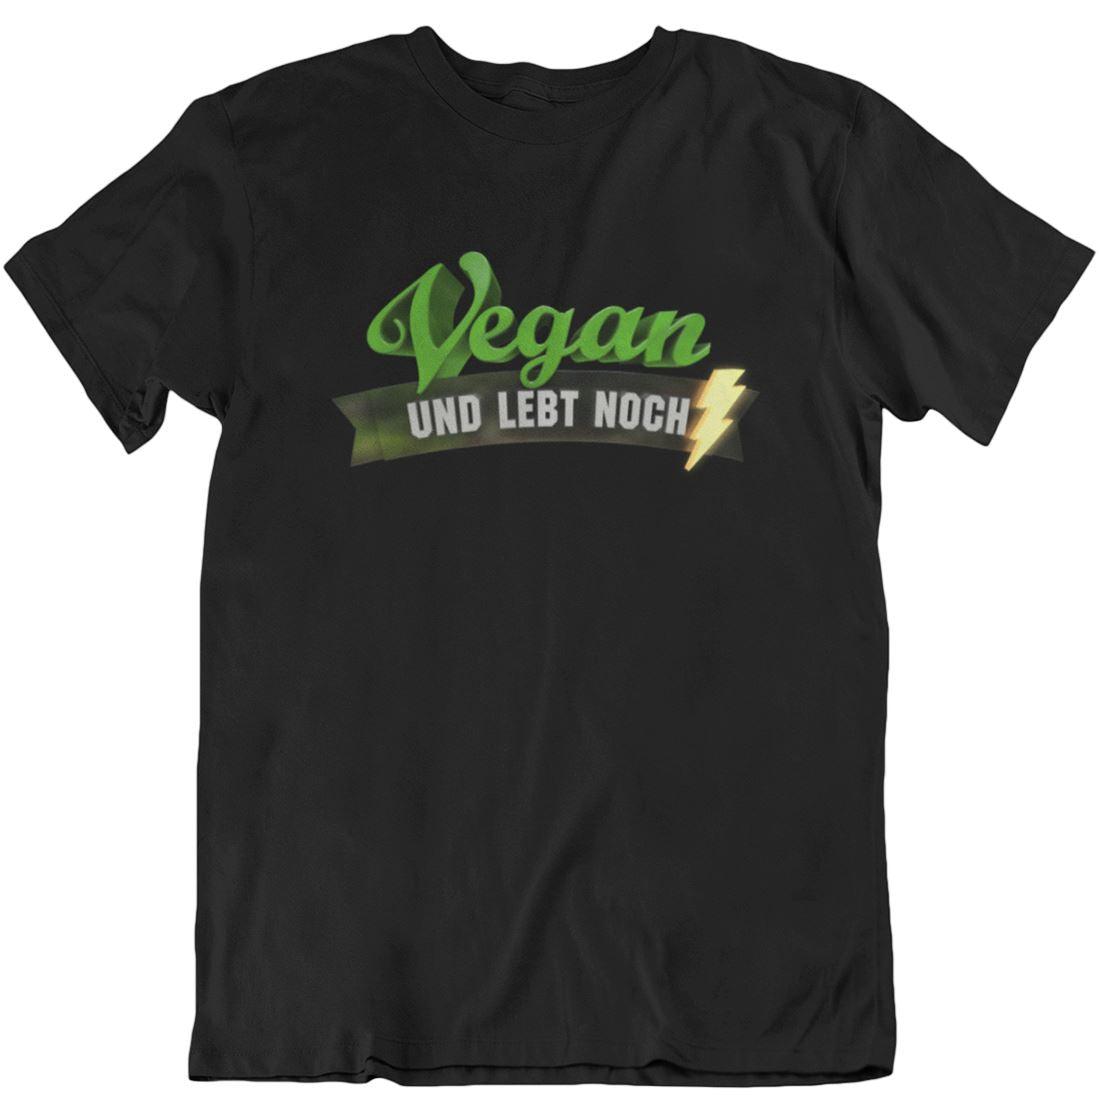 Vegan und lebt noch [v-reena] - Unisex Organic Shirt Rocker T-Shirt ST/ST Shirtee Schwarz S 